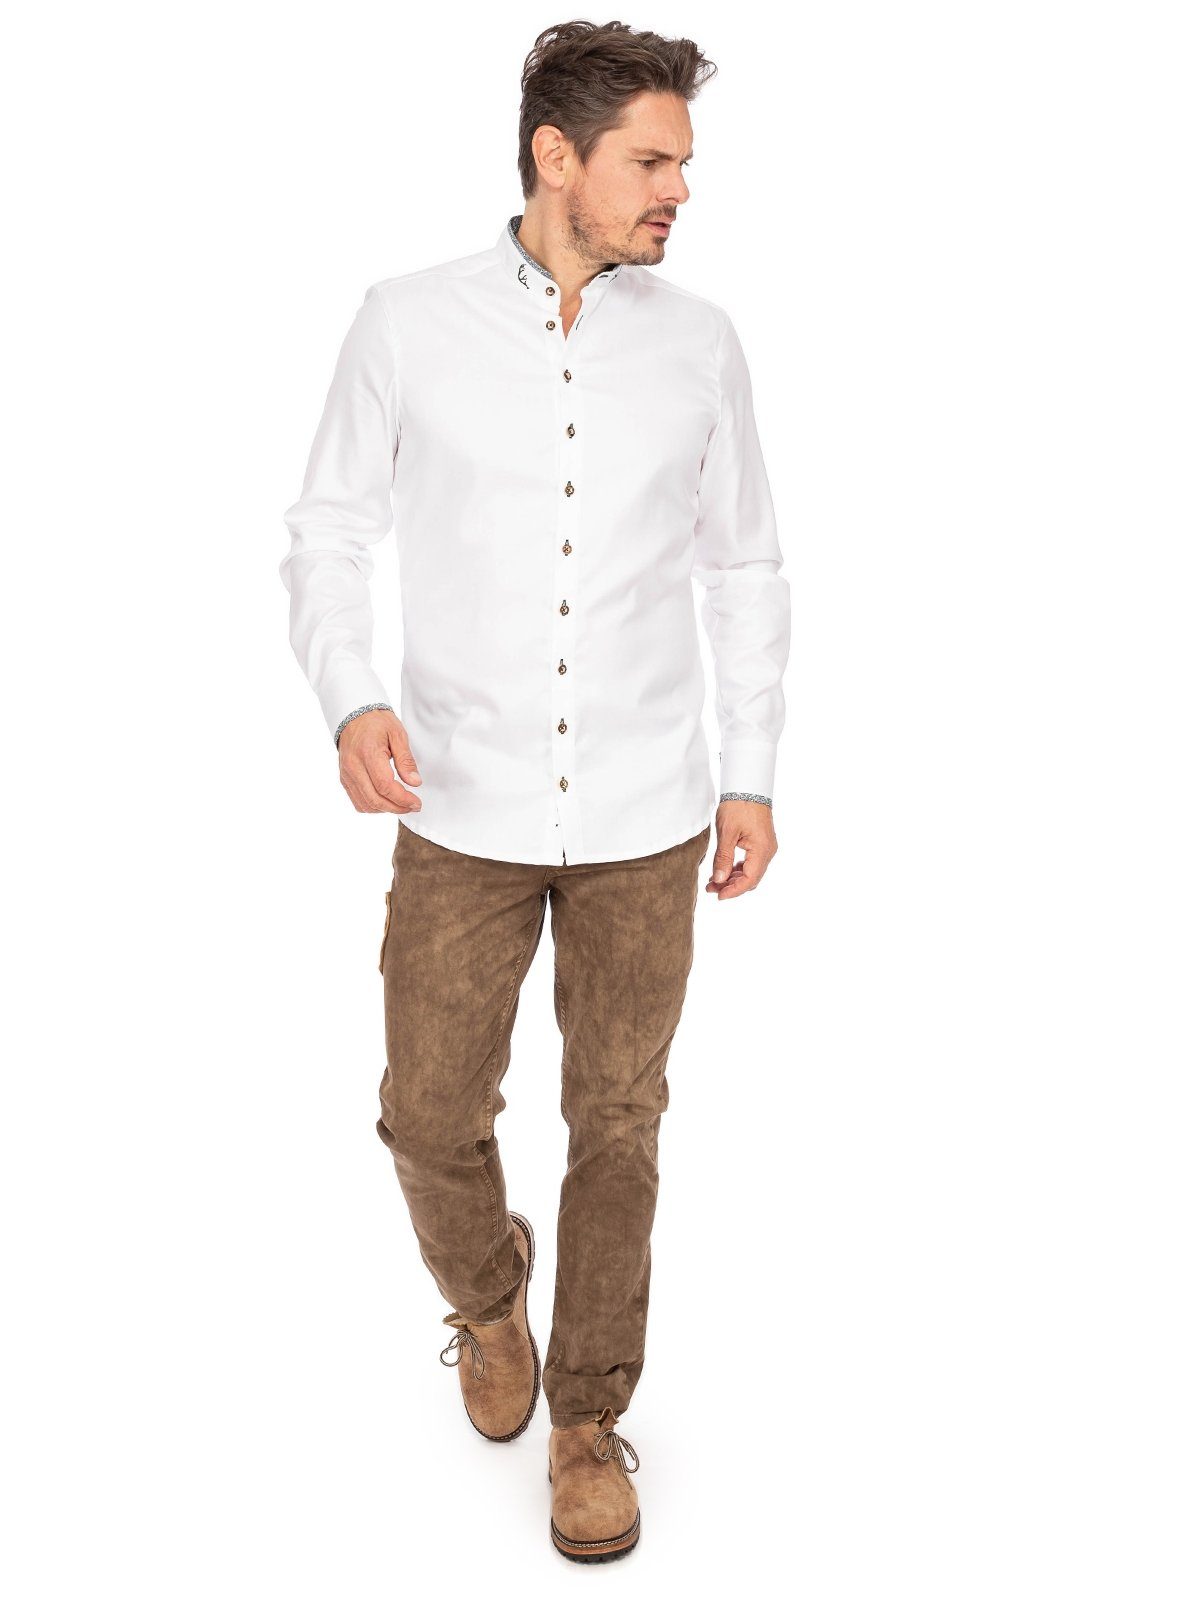 oliv Fi Gipfelstürmer Hemd weiß Stehkragen Trachtenhemd (Slim 420000-4246-155